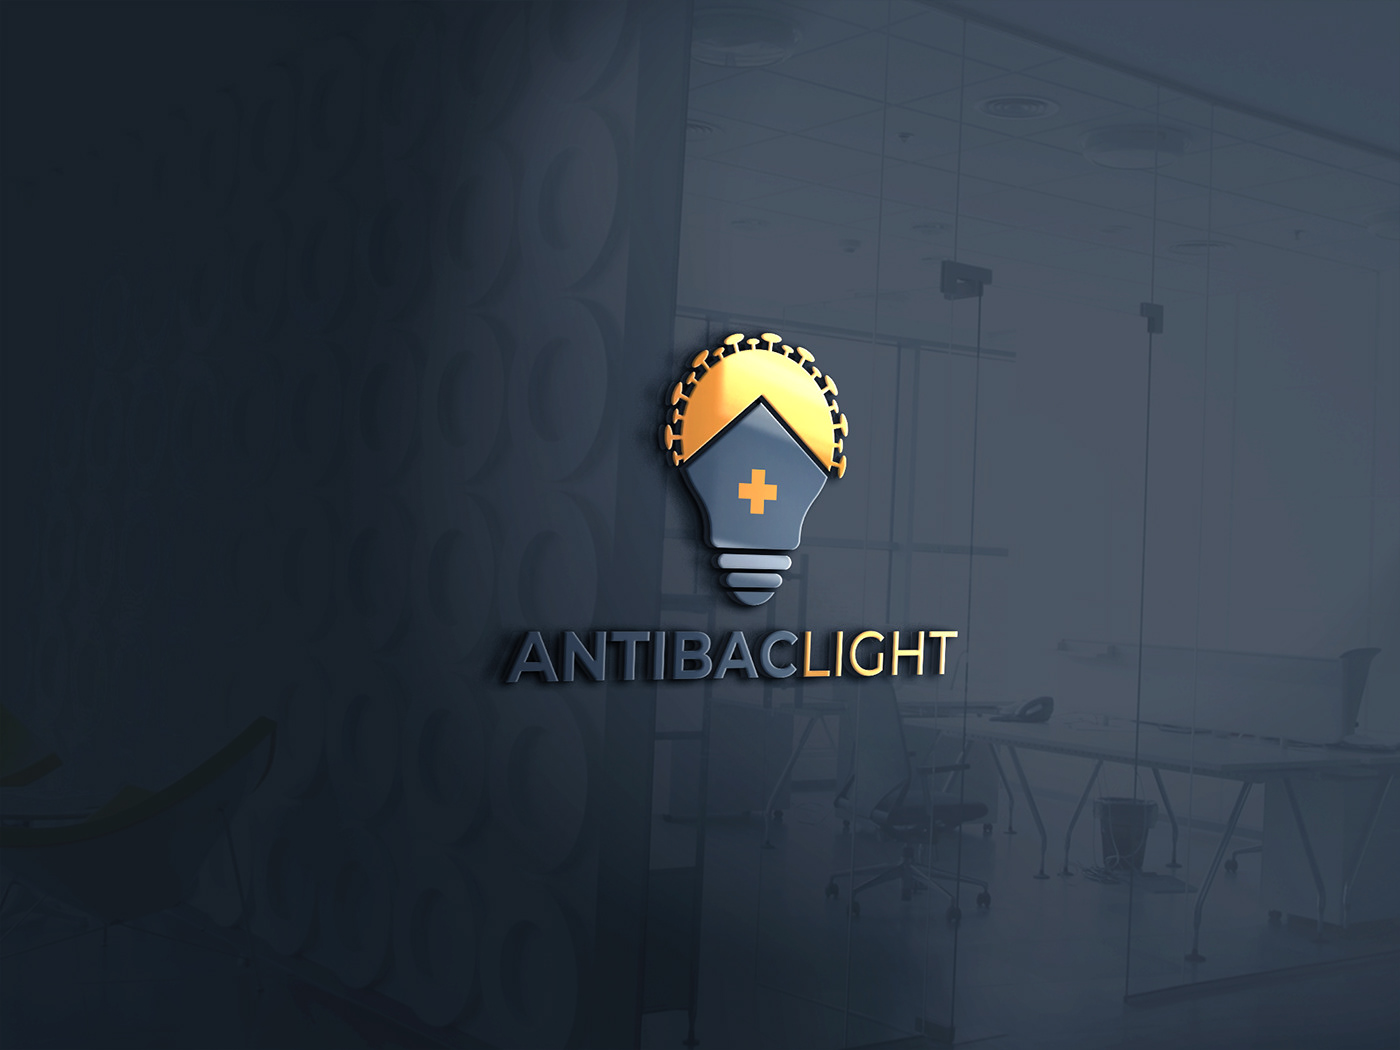 anti anti-bqc antivaclight bac bulb clean creative Icon light modern